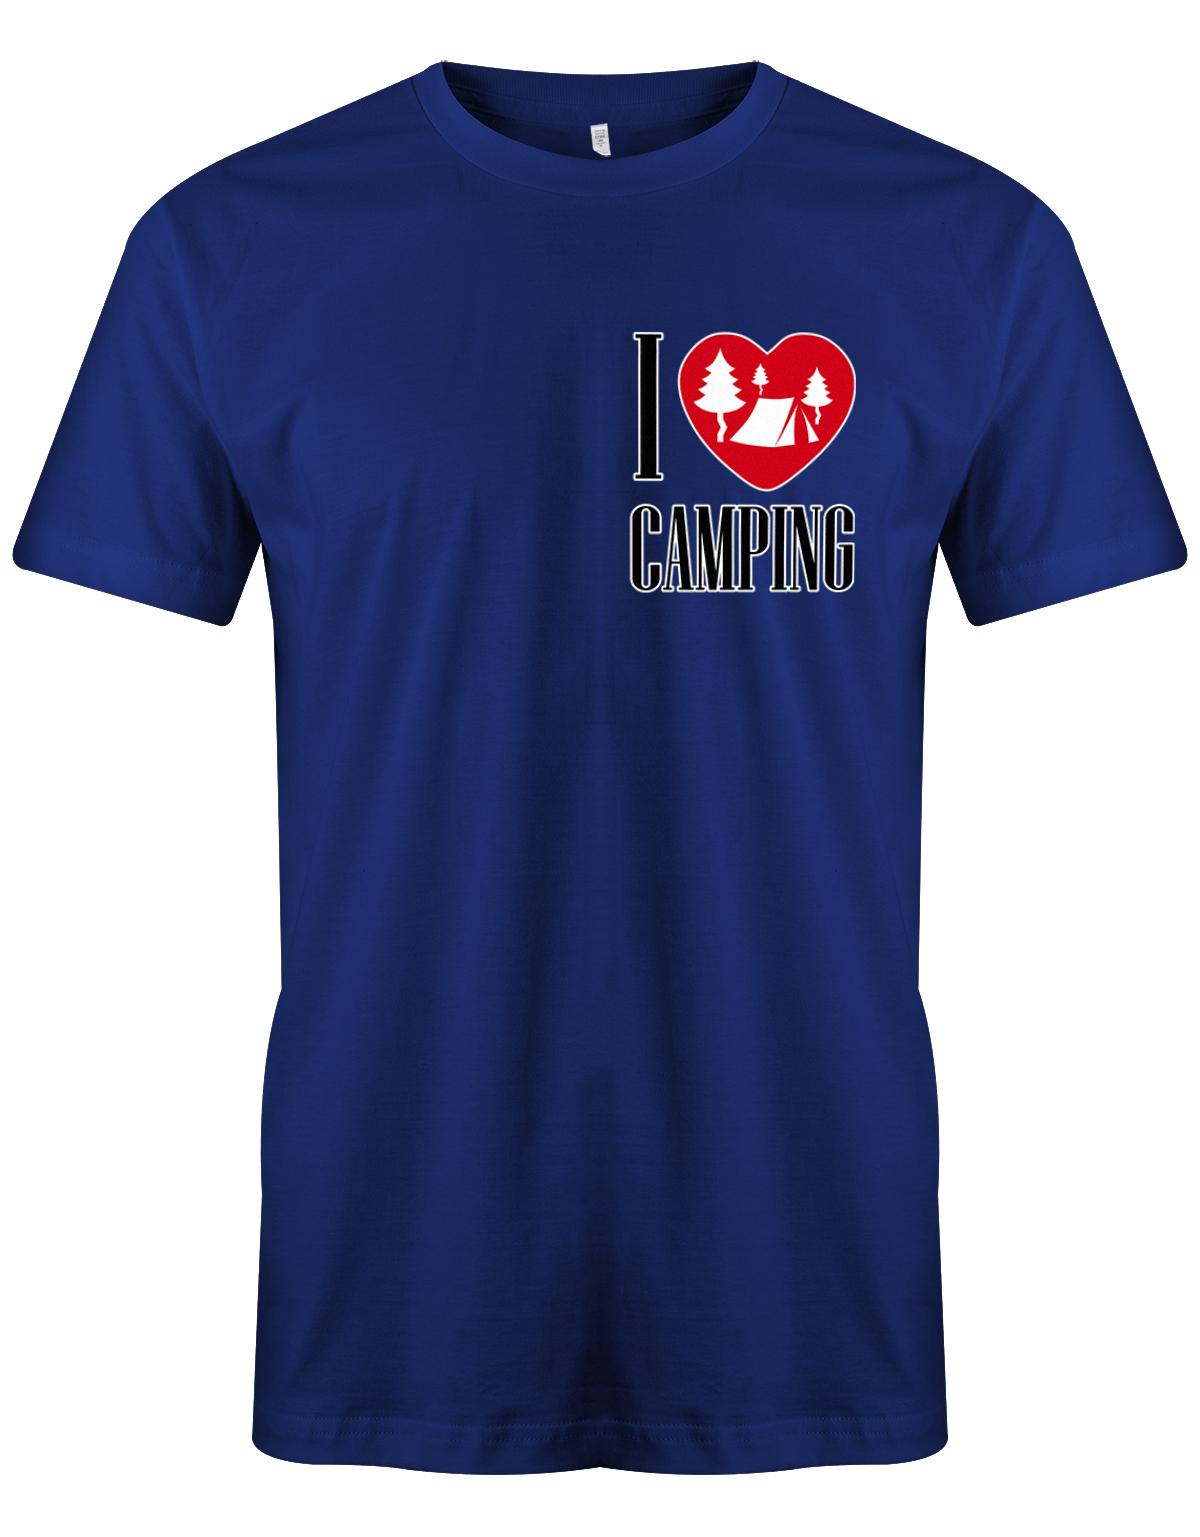 I-love-Camping-Herren-Shirt-royalblau